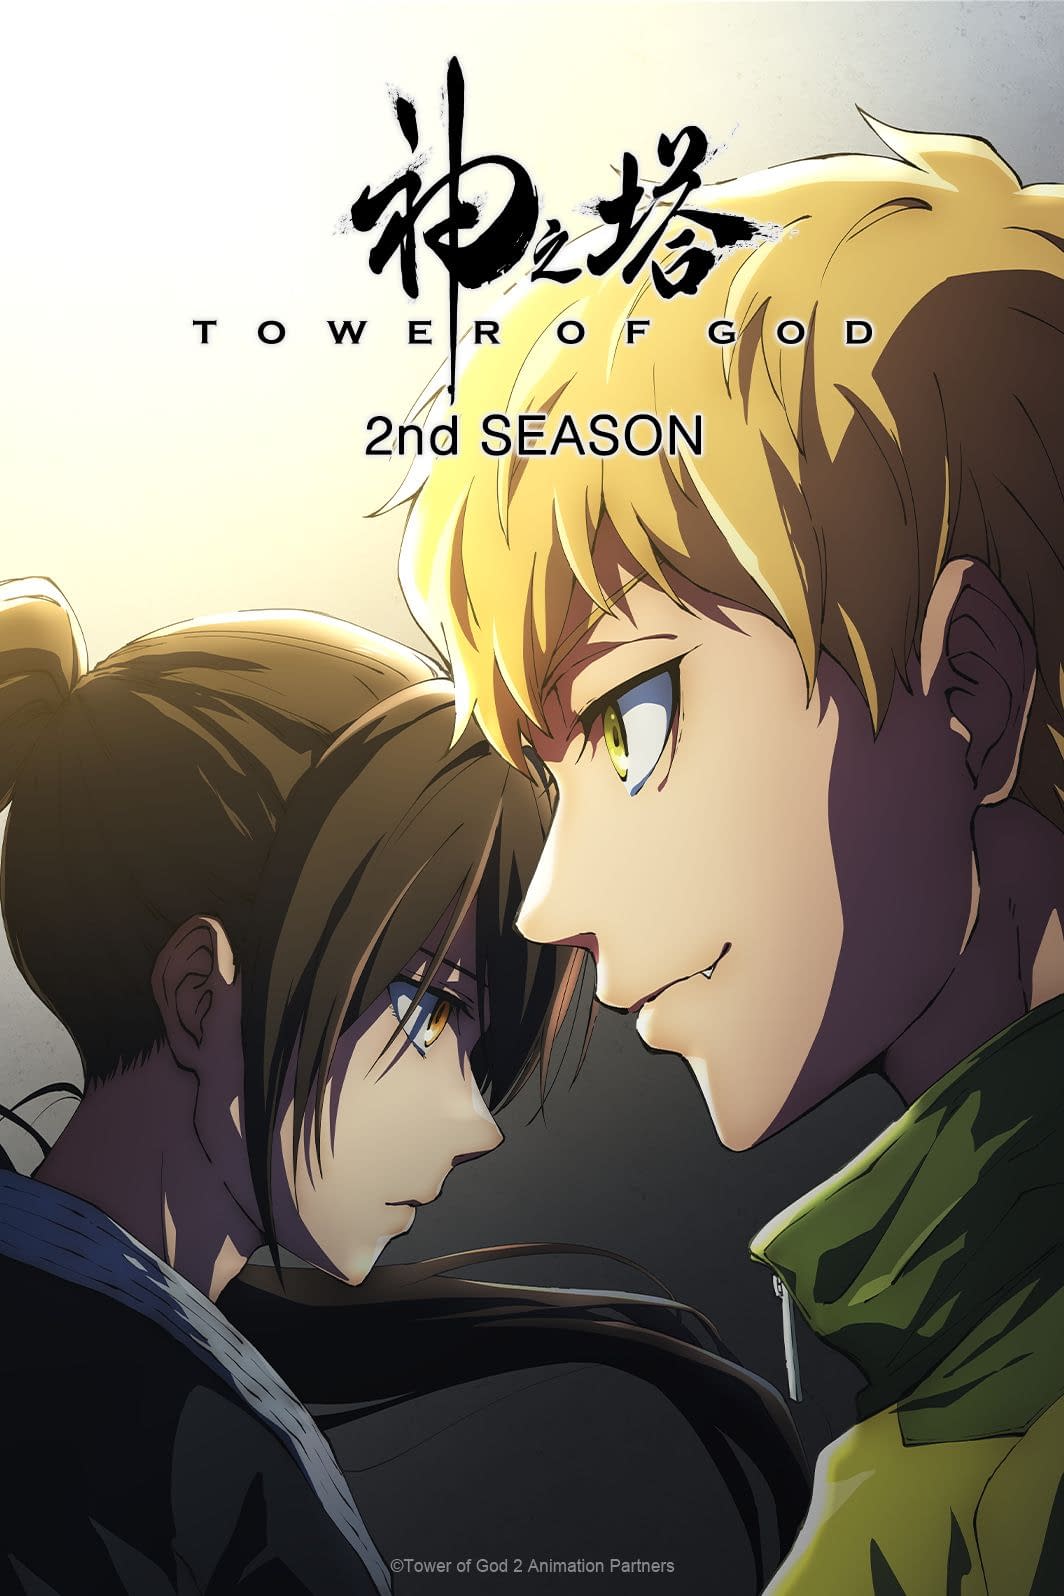 MAJOR SECOND Season 2 TV Anime Returns on May 30 [UPDATED] - Crunchyroll  News